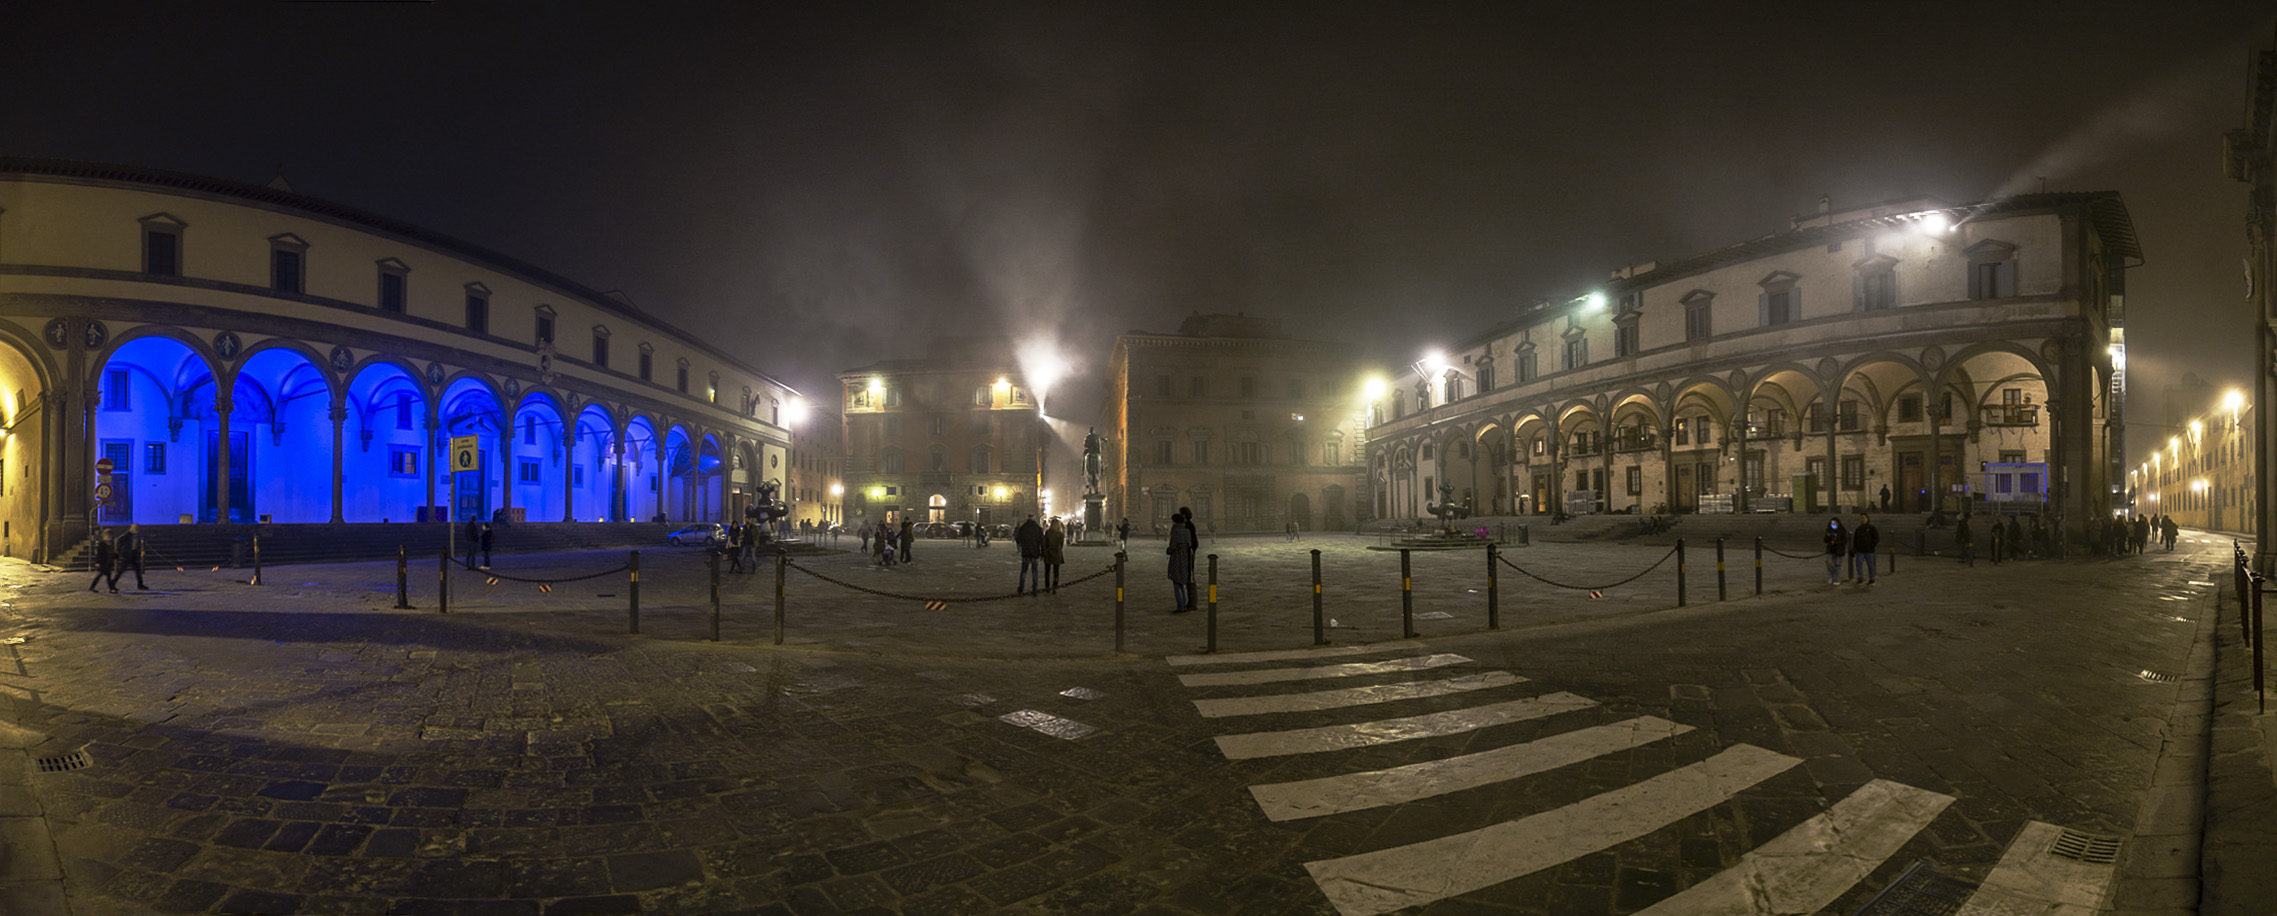 Firenze ...nebbiosa...